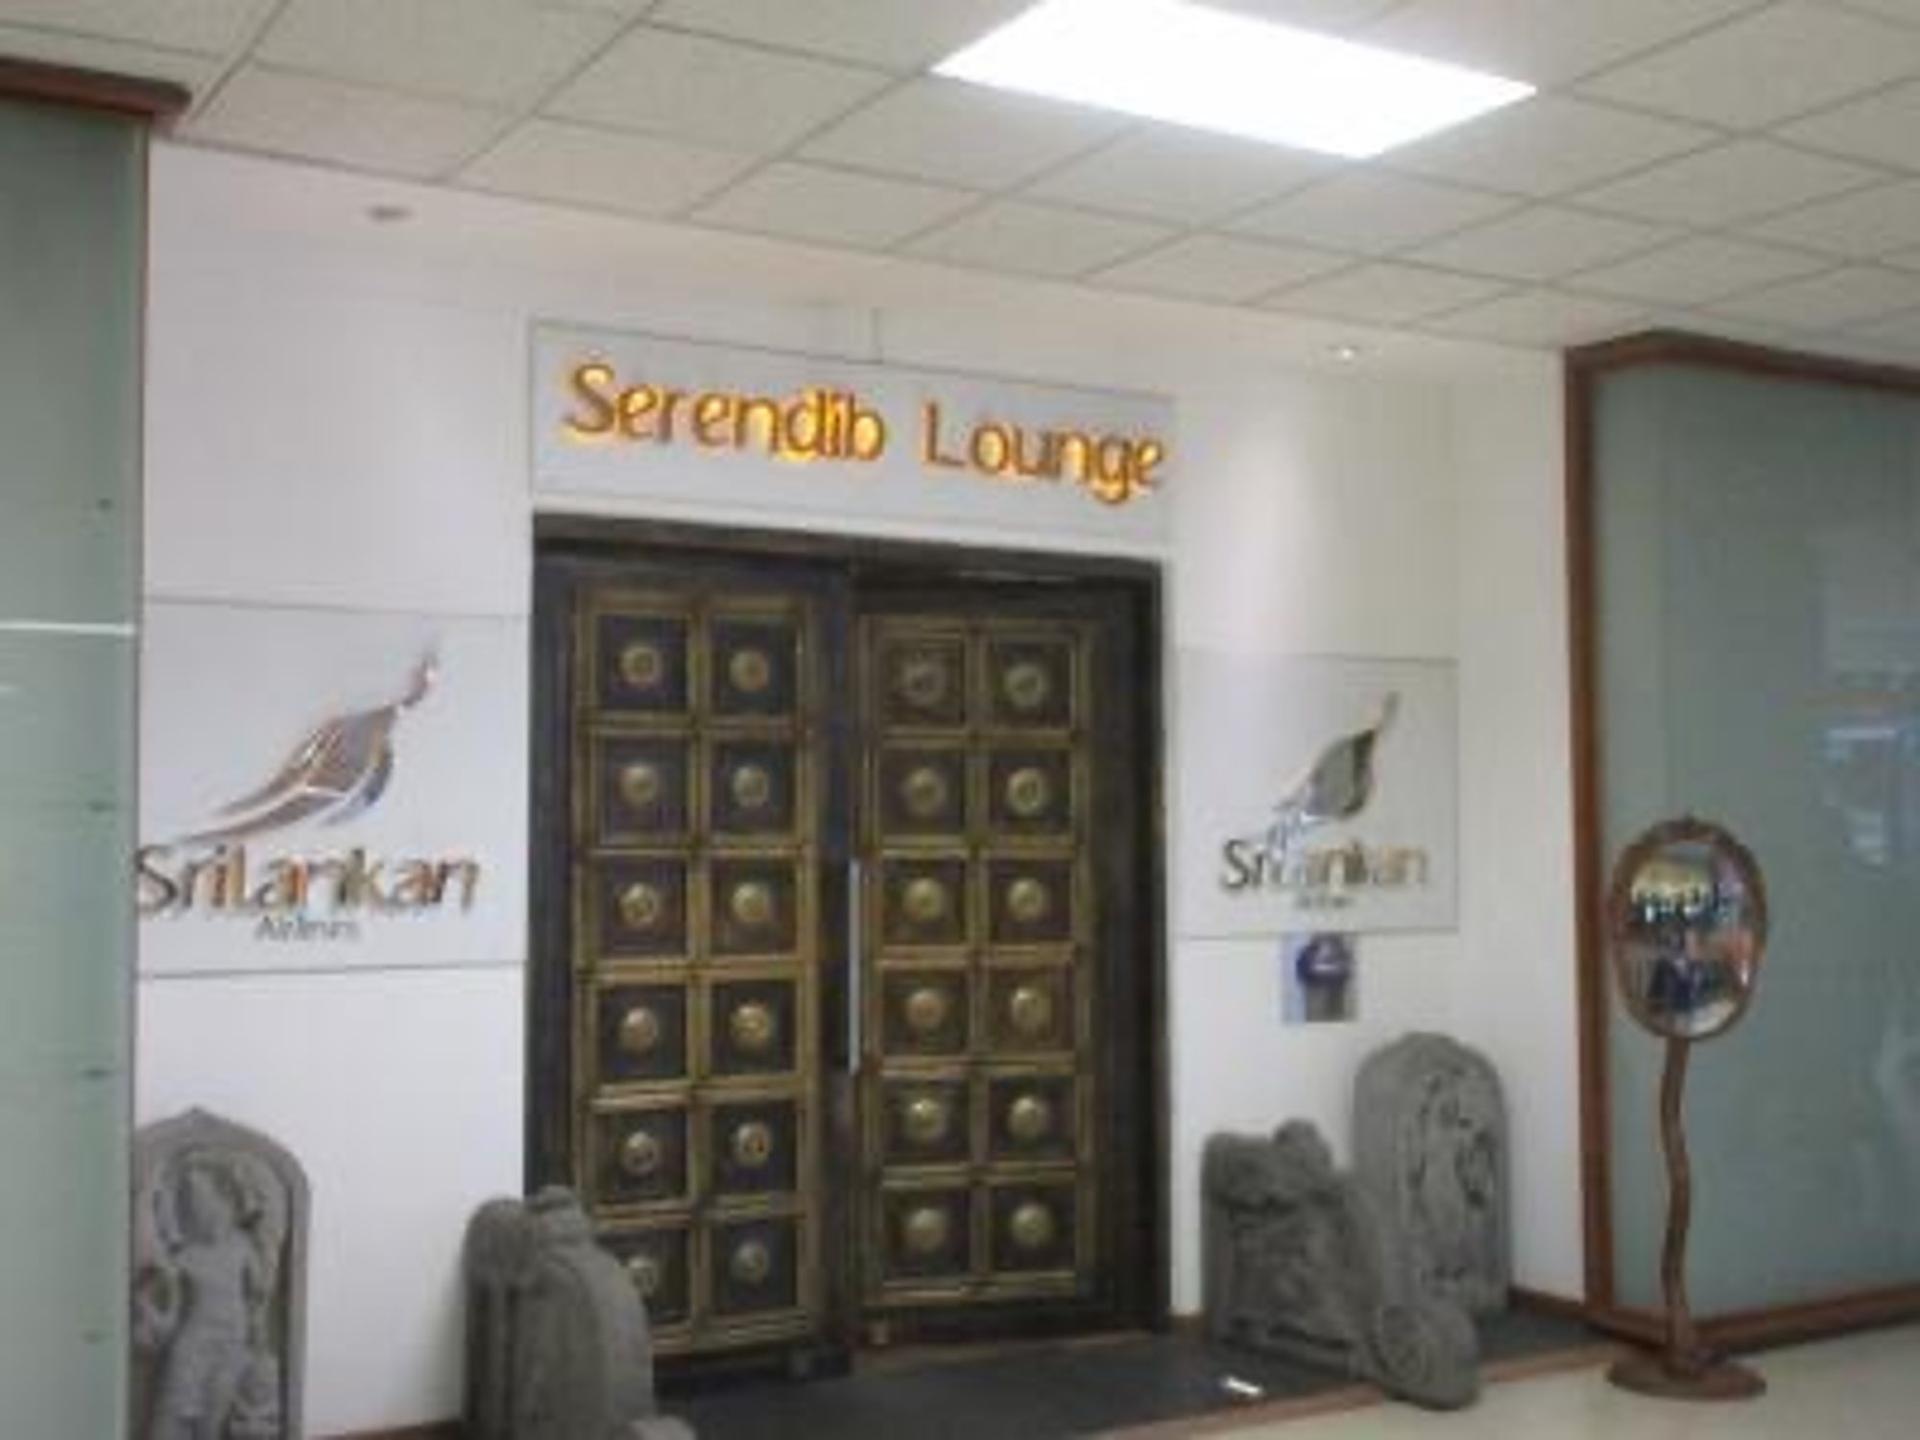 SriLankan Airlines Serendib Lounge image 11 of 14